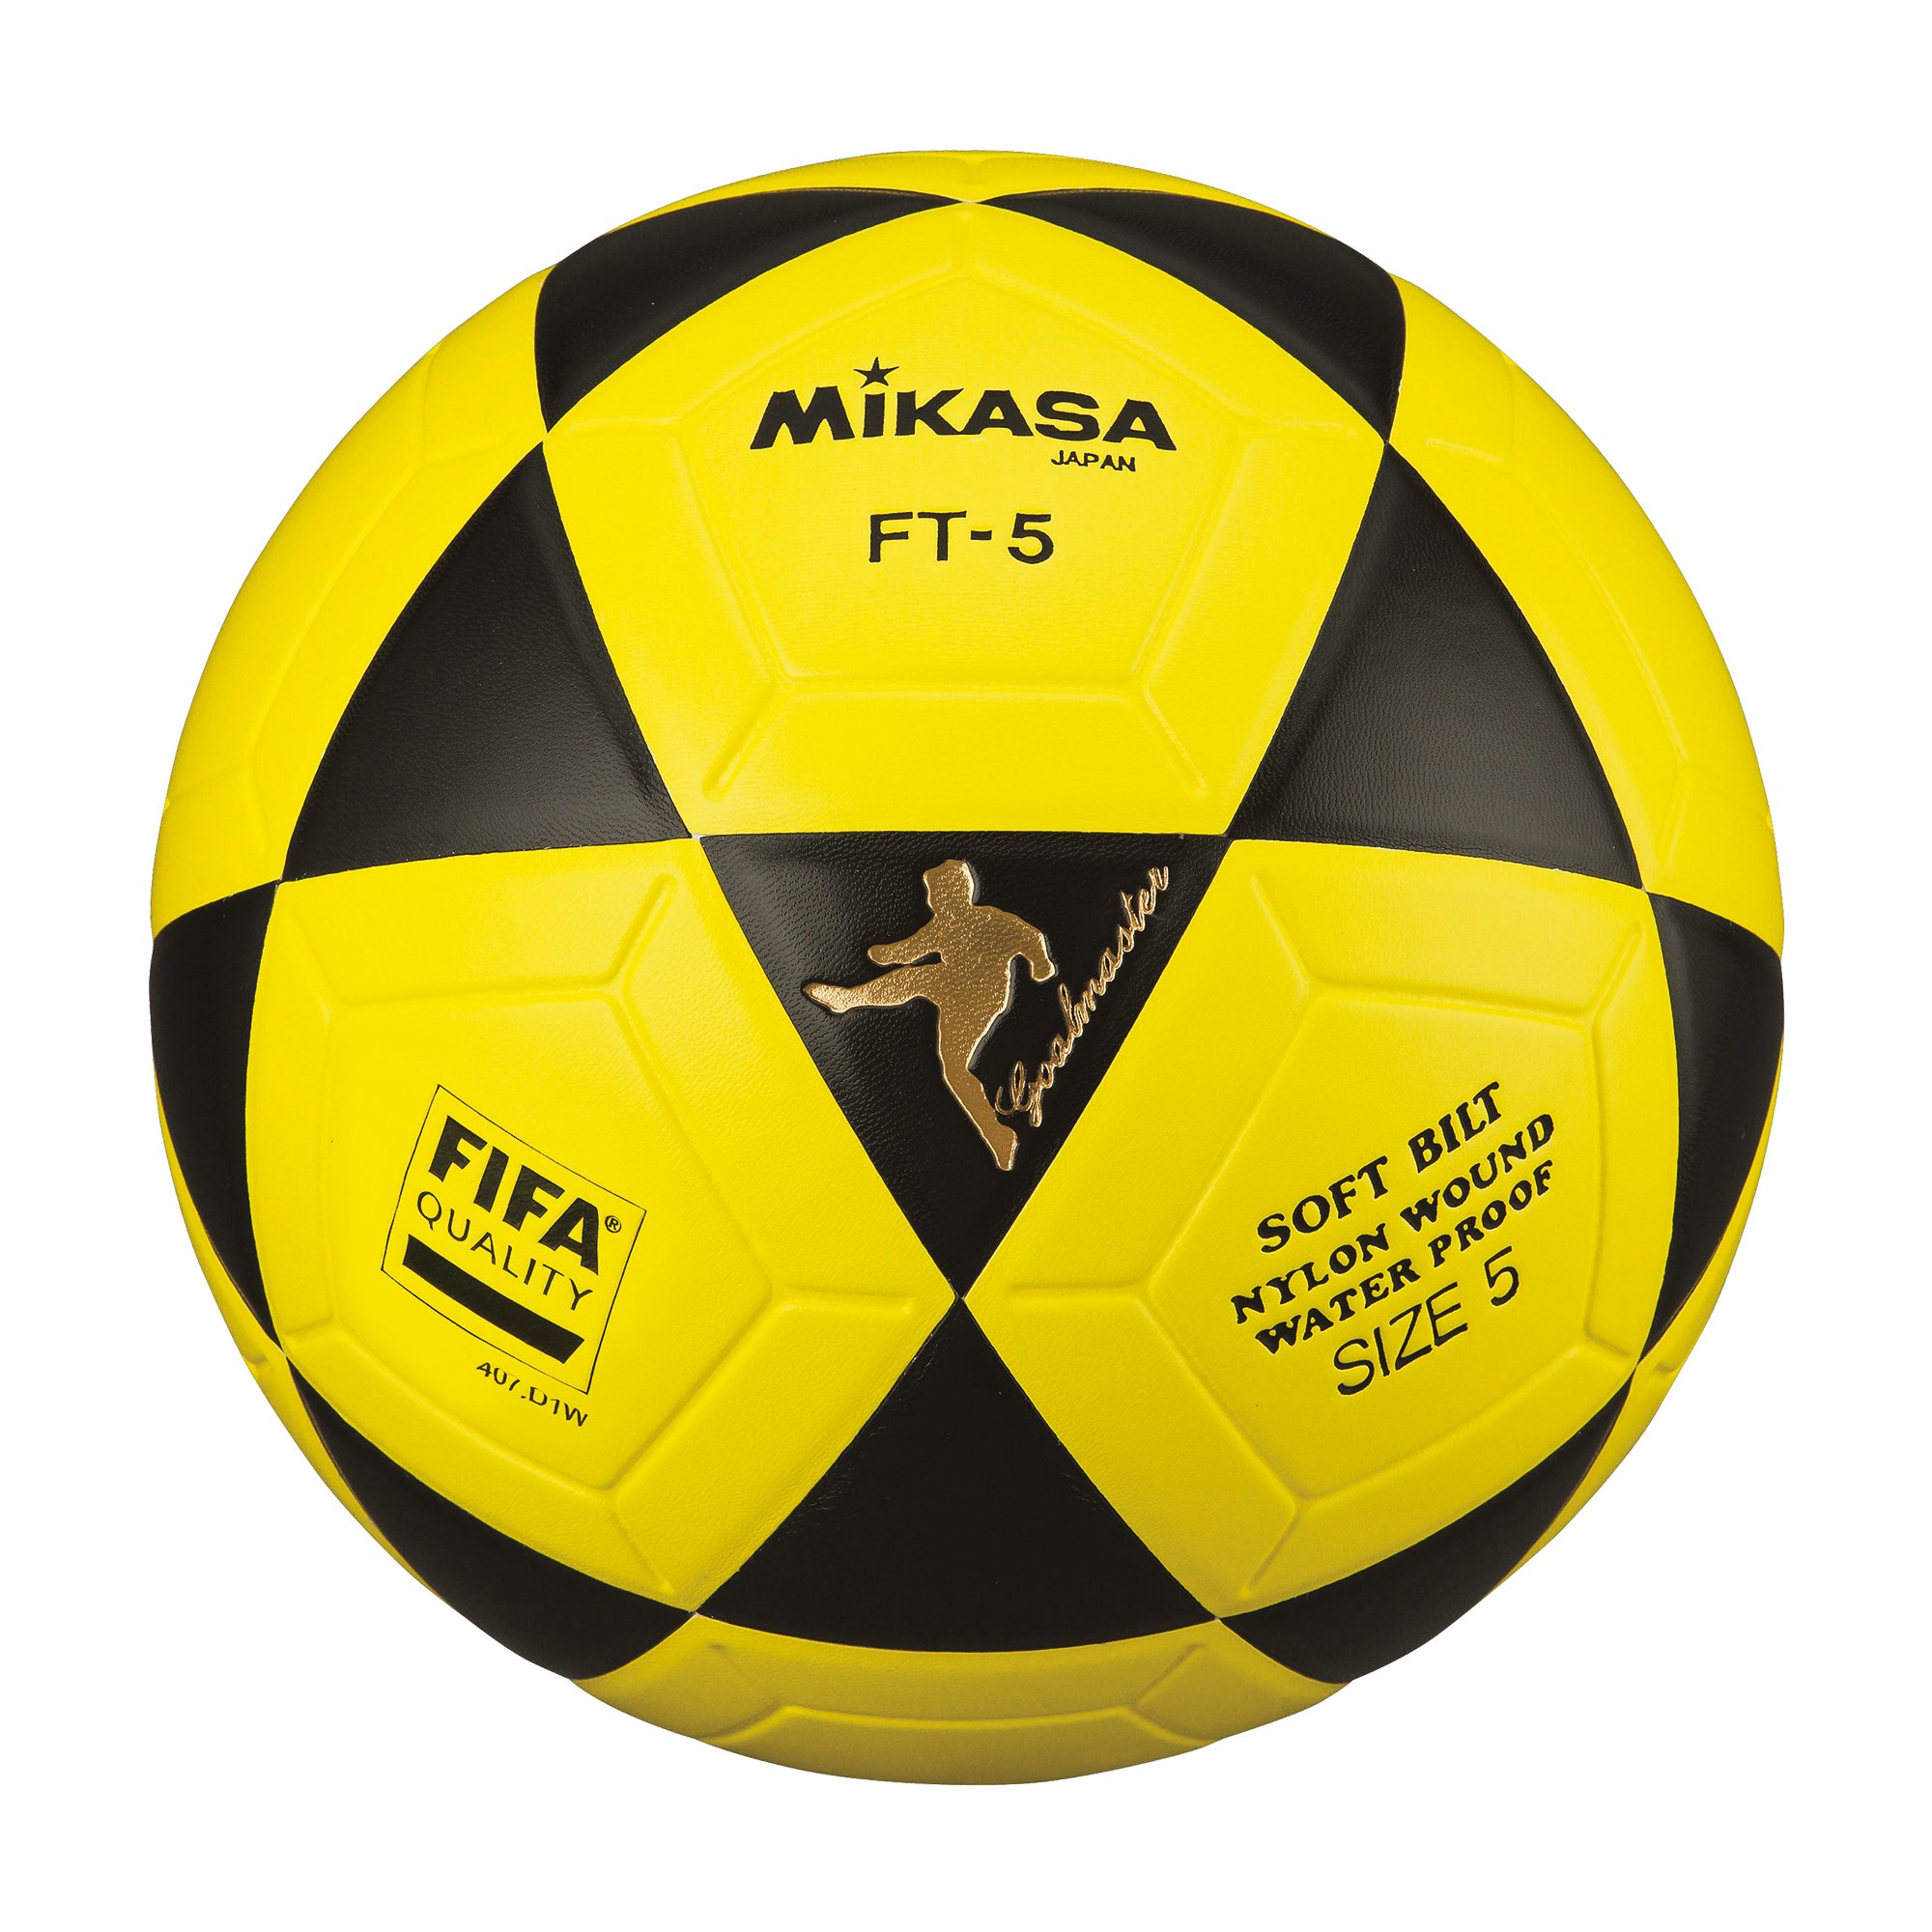 Mikasa Footvolleyball FT-5 BKY FIFA